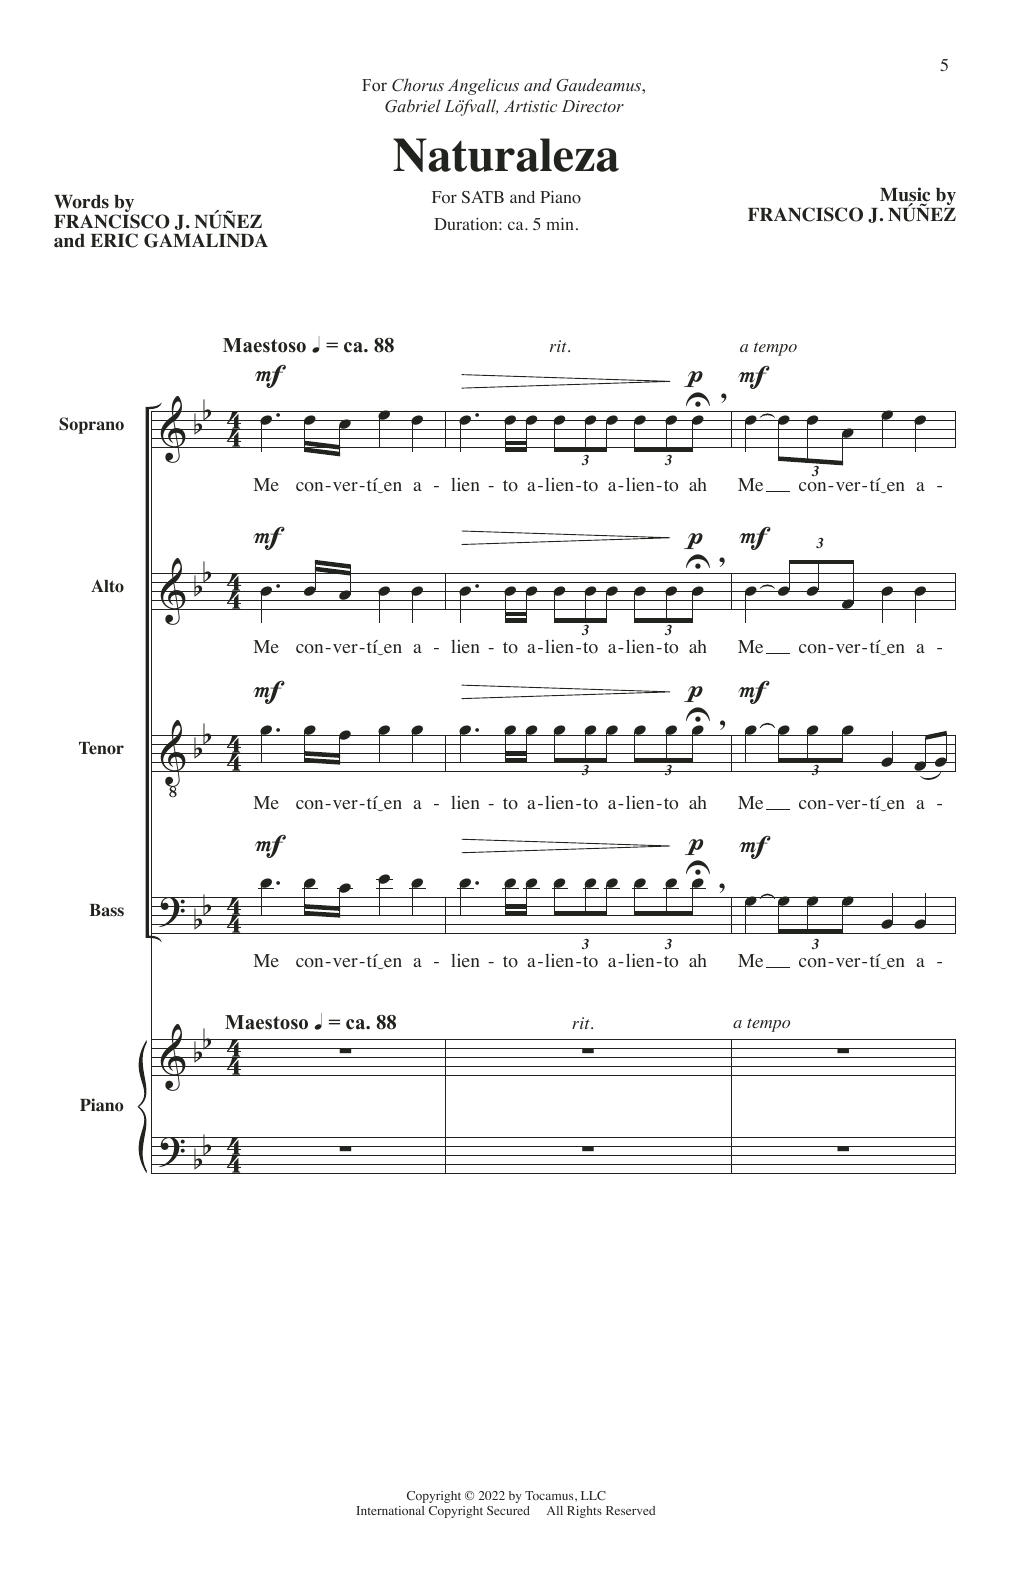 Francisco J. Núñez Naturaleza sheet music notes and chords arranged for SATB Choir